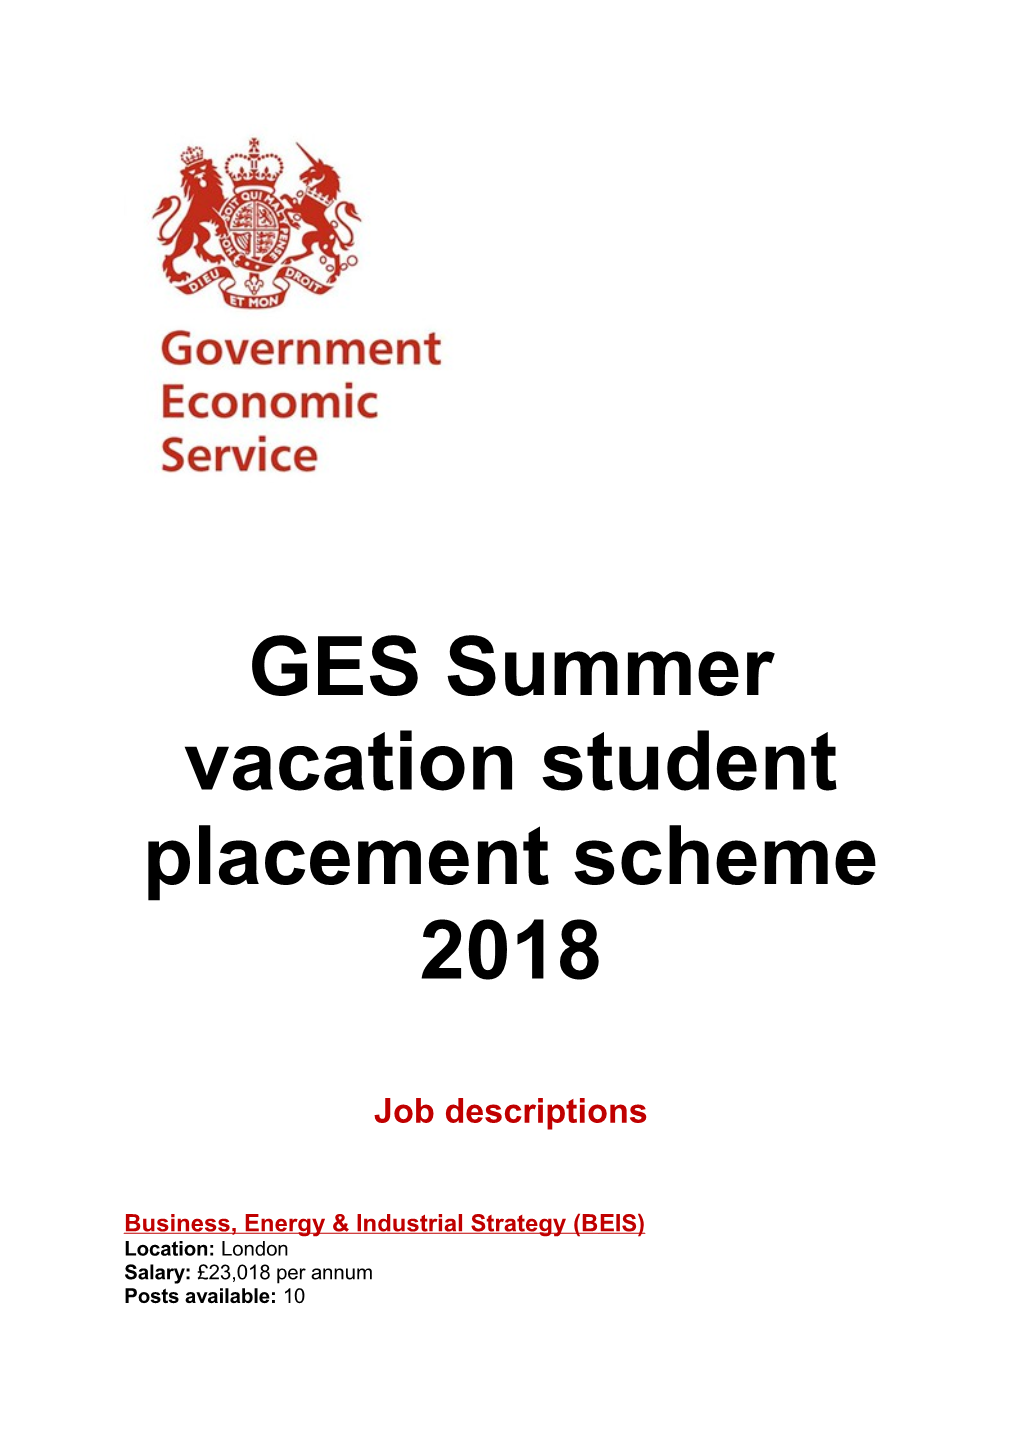 GES Summer Vacation Student Placement Scheme 2018